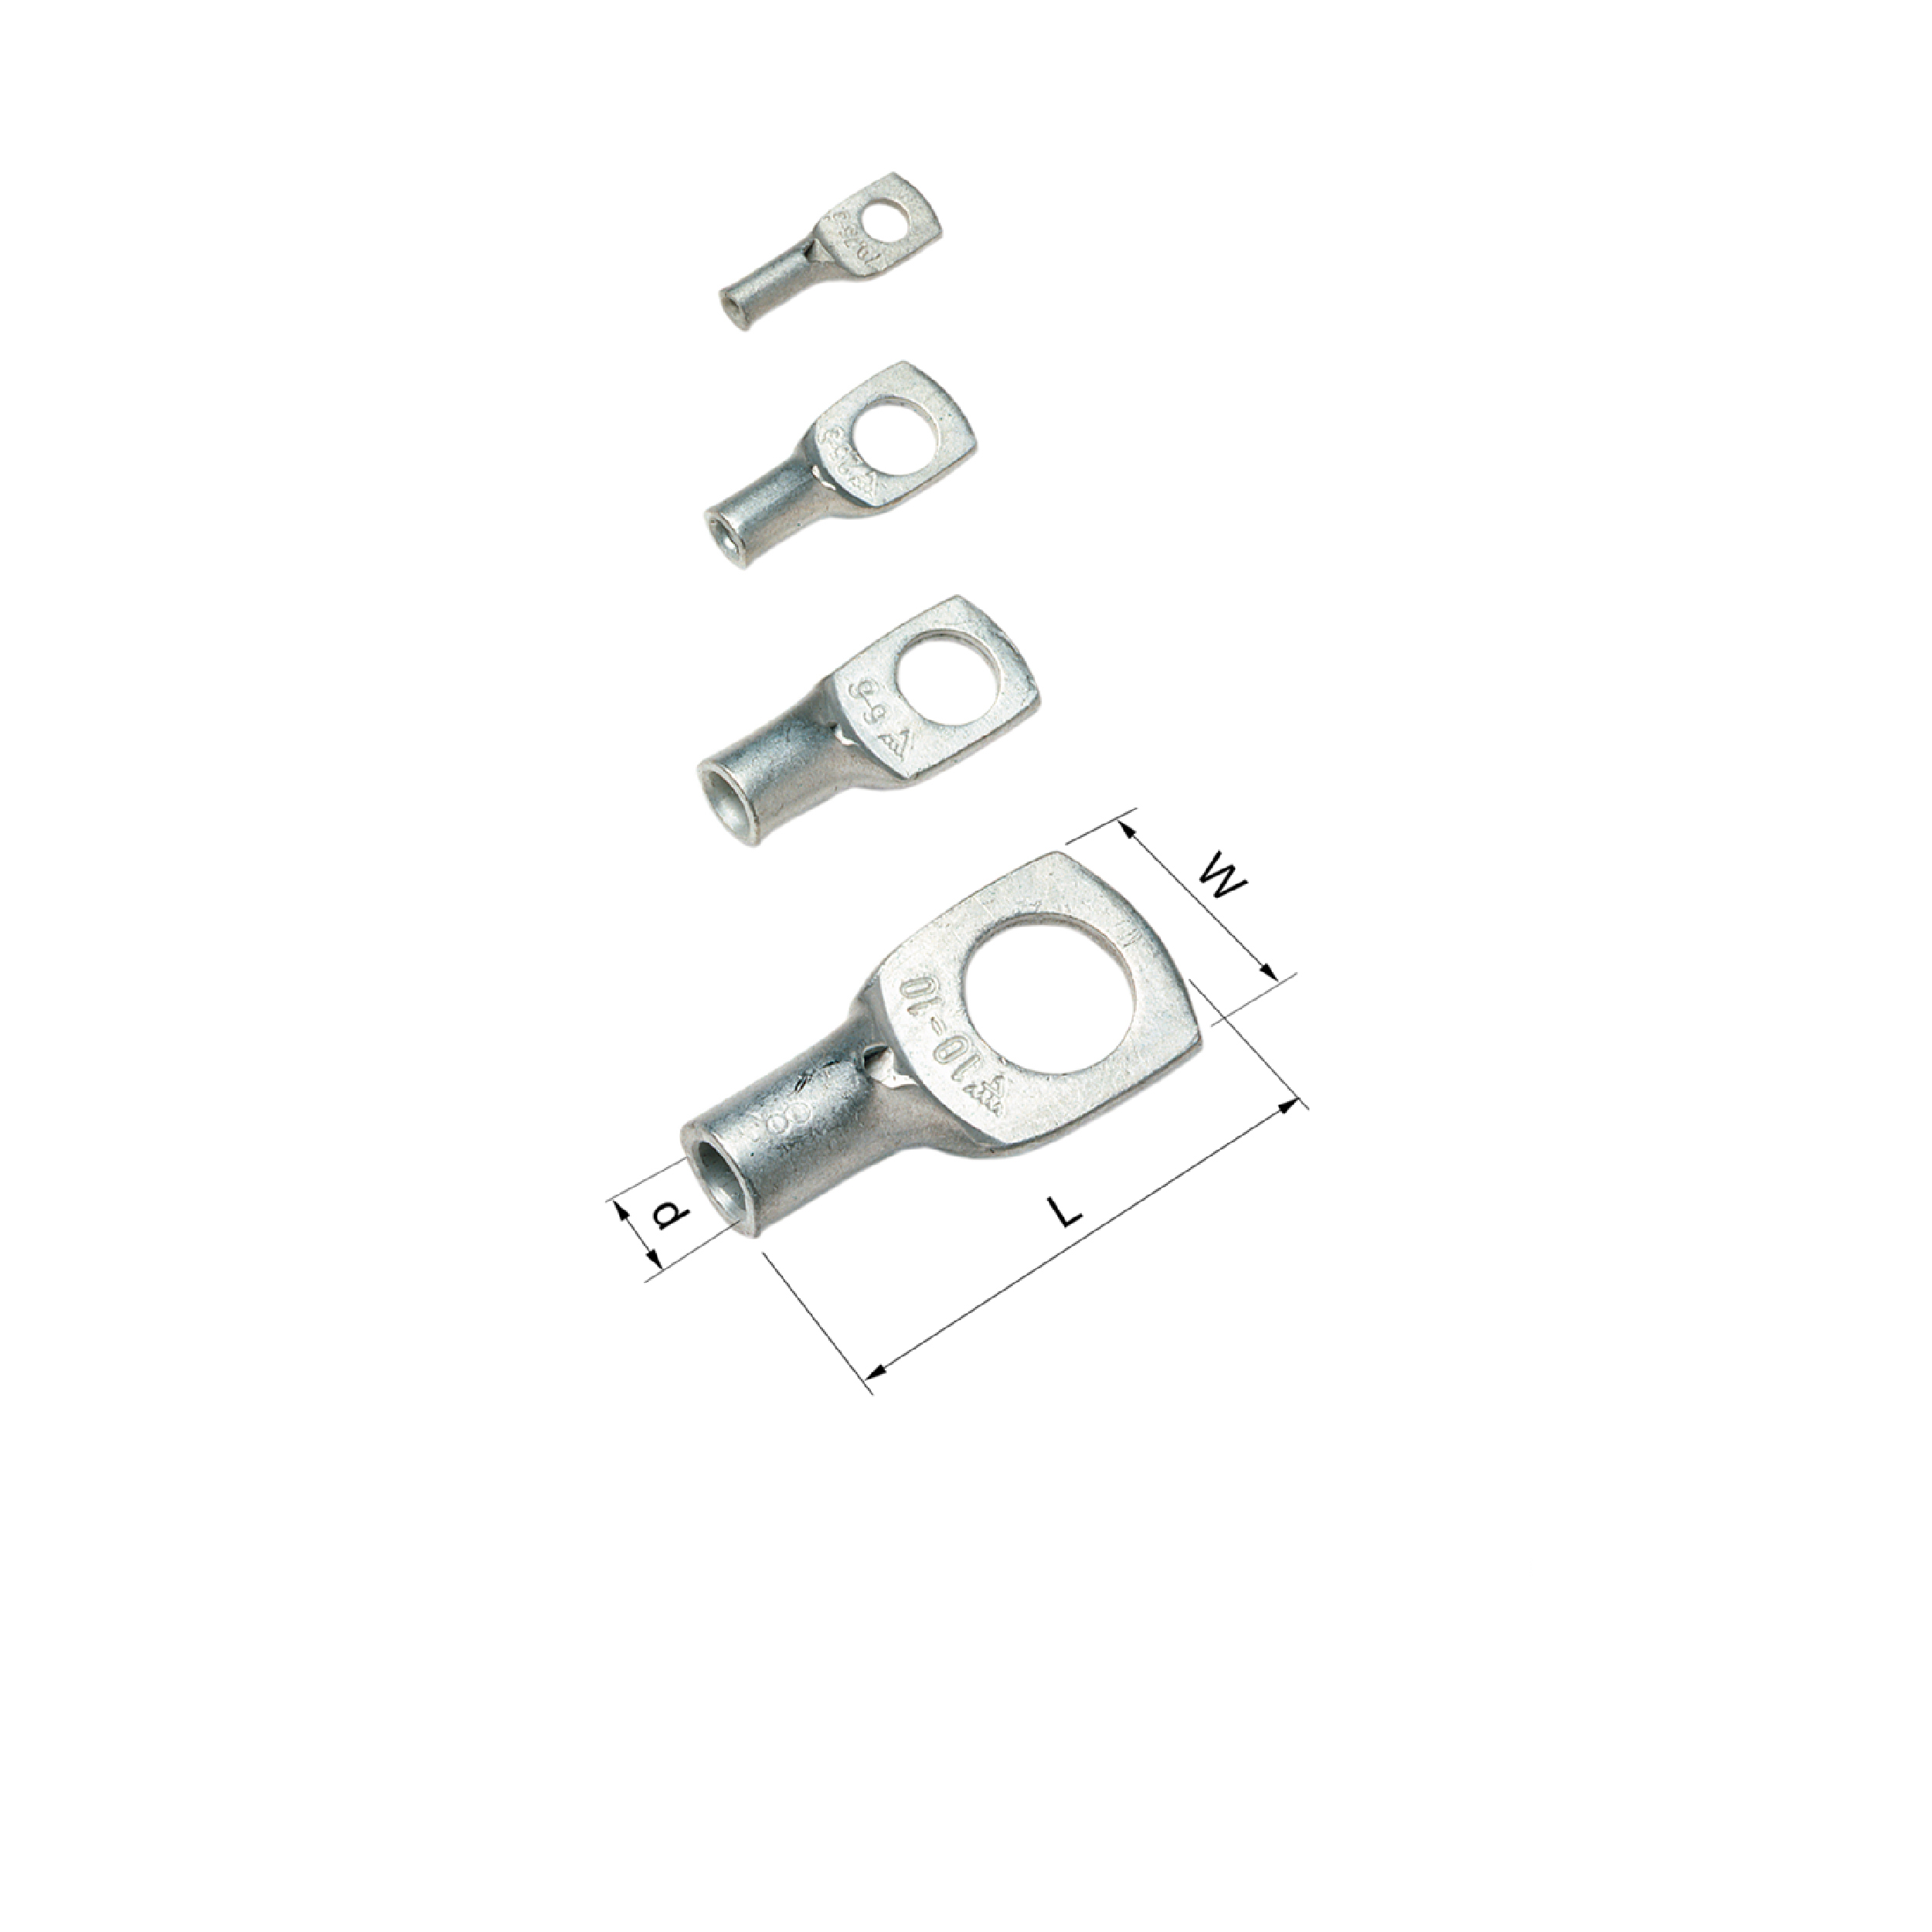 Elpress KR Copper Cable Lugs - for Stranded & Flexible Cable (0.75-10mm²) (KR4-6, KR6-6, KR10-6, KR10-12)